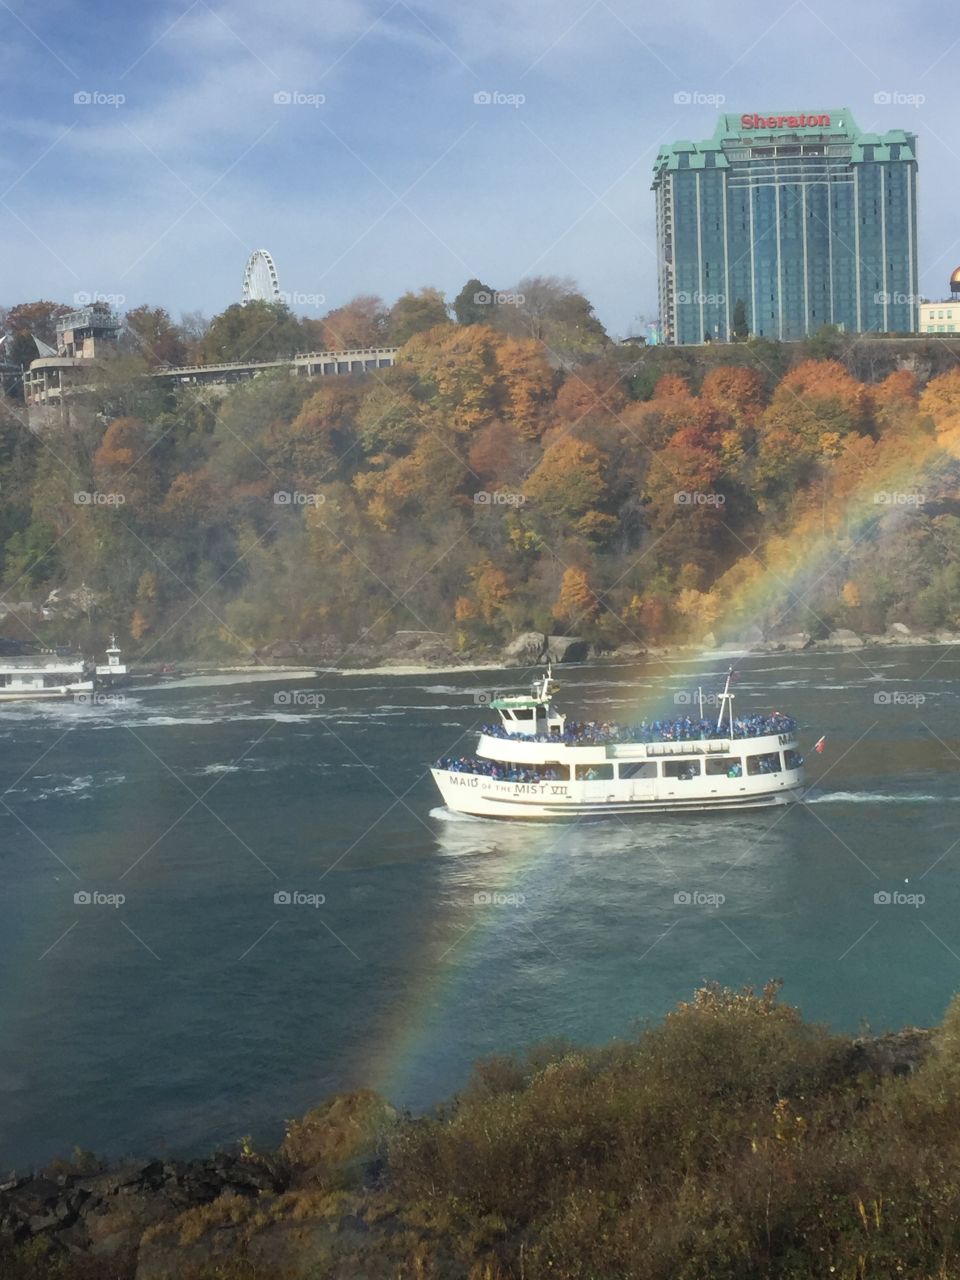 Niagara Falls Rainbow 